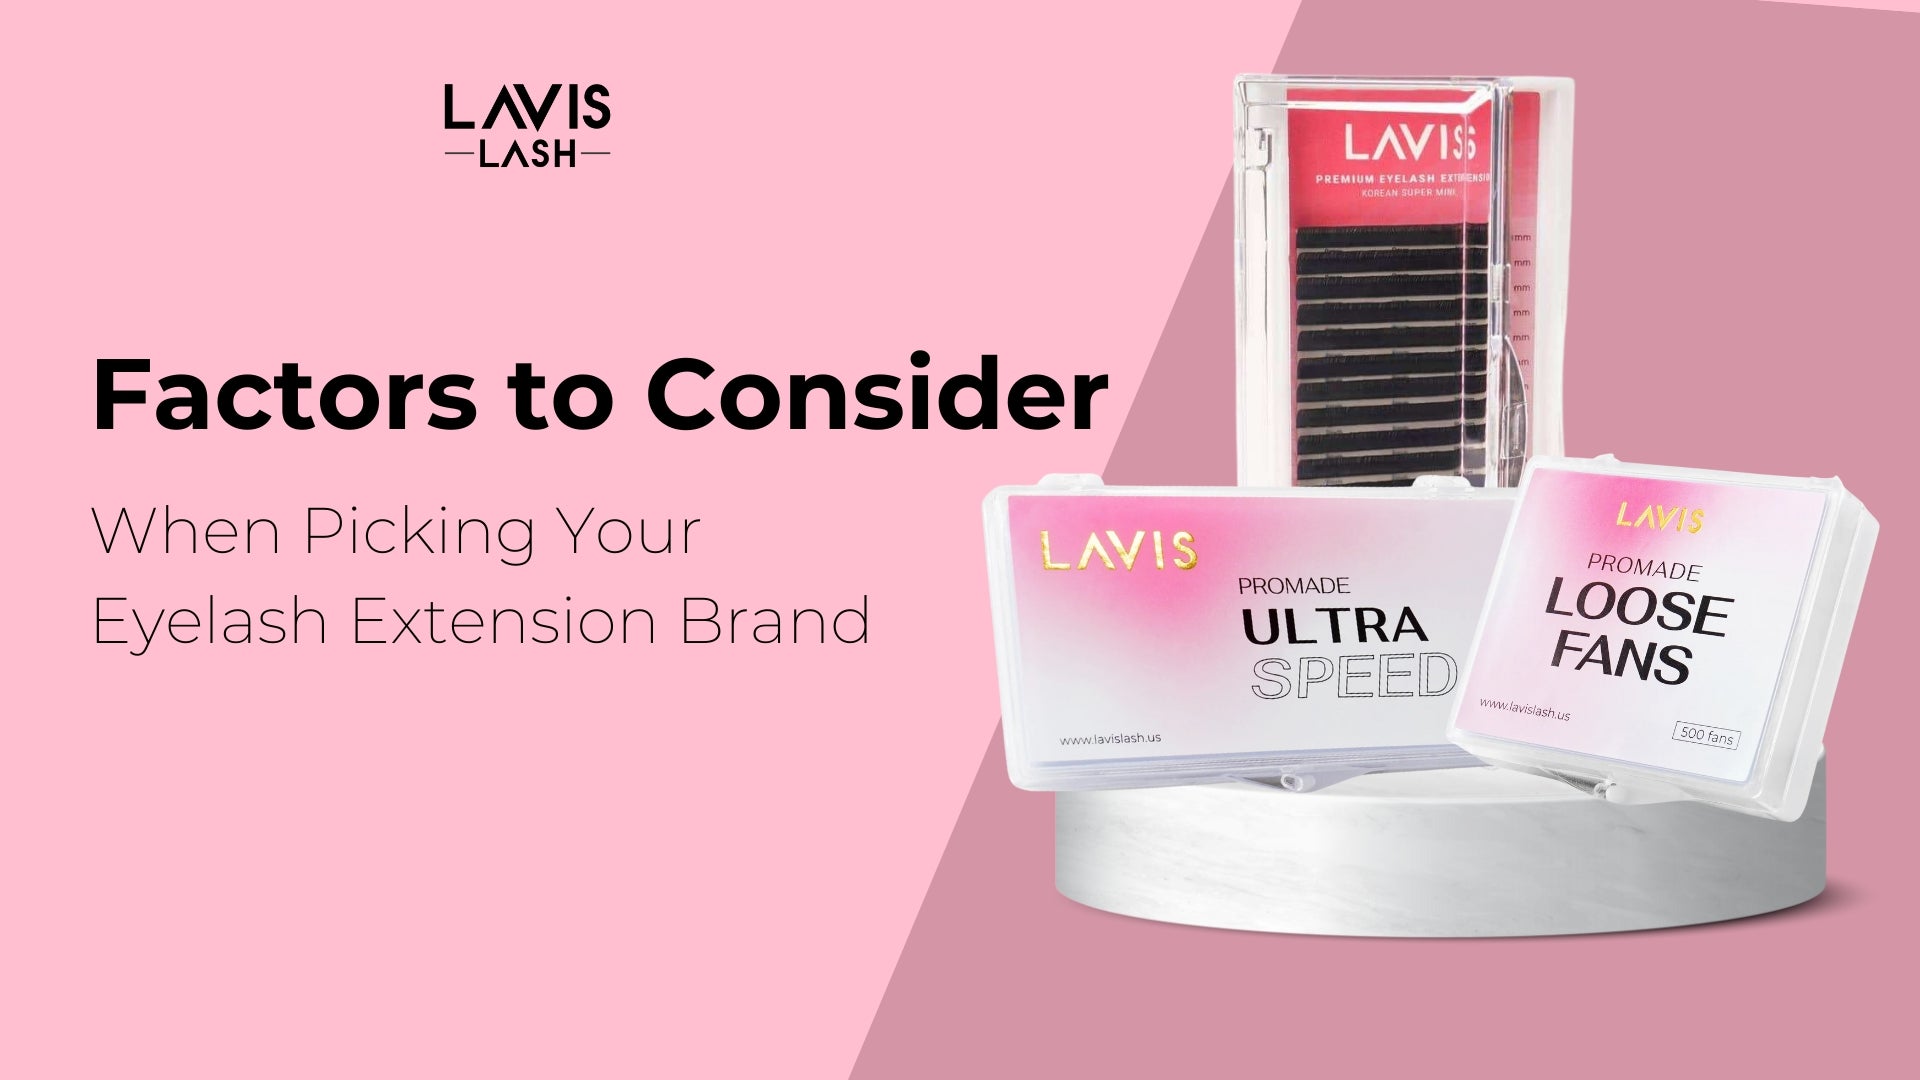 LavisLash or Paris Lash: Factors to Consider When Picking Your Eyelash Extension Brand